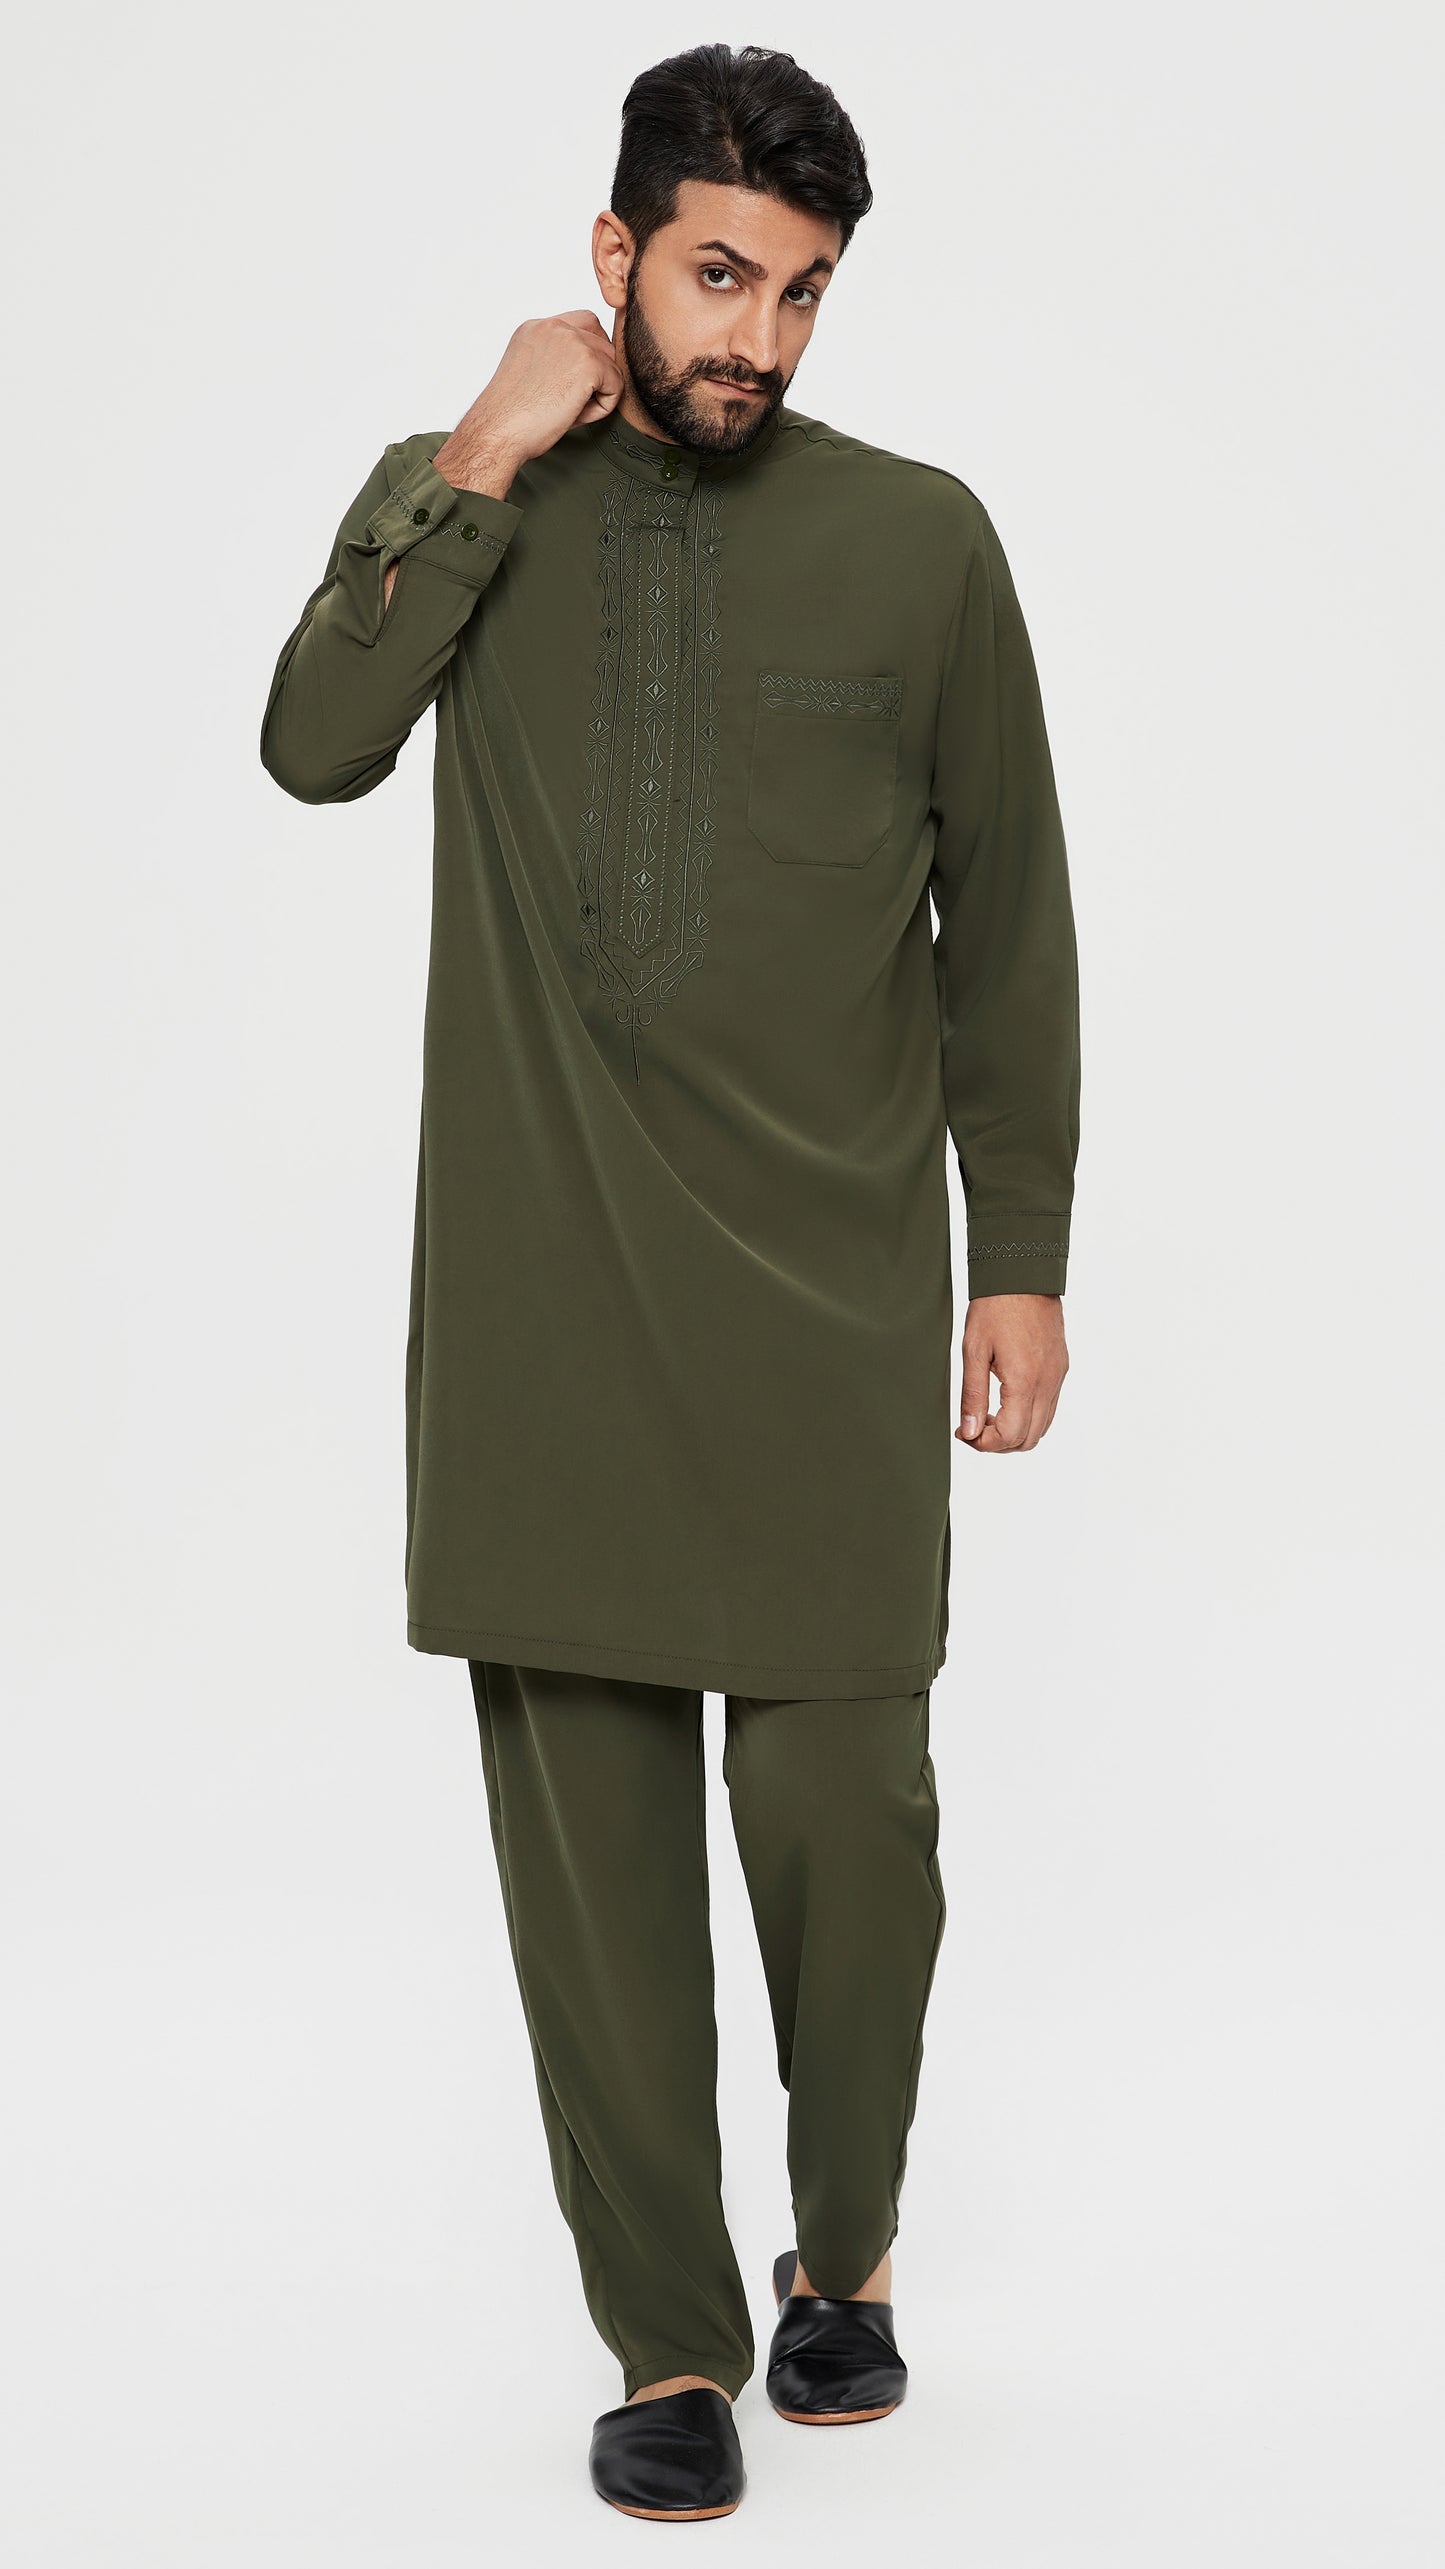  Qamis - Khaki aus Pakistan